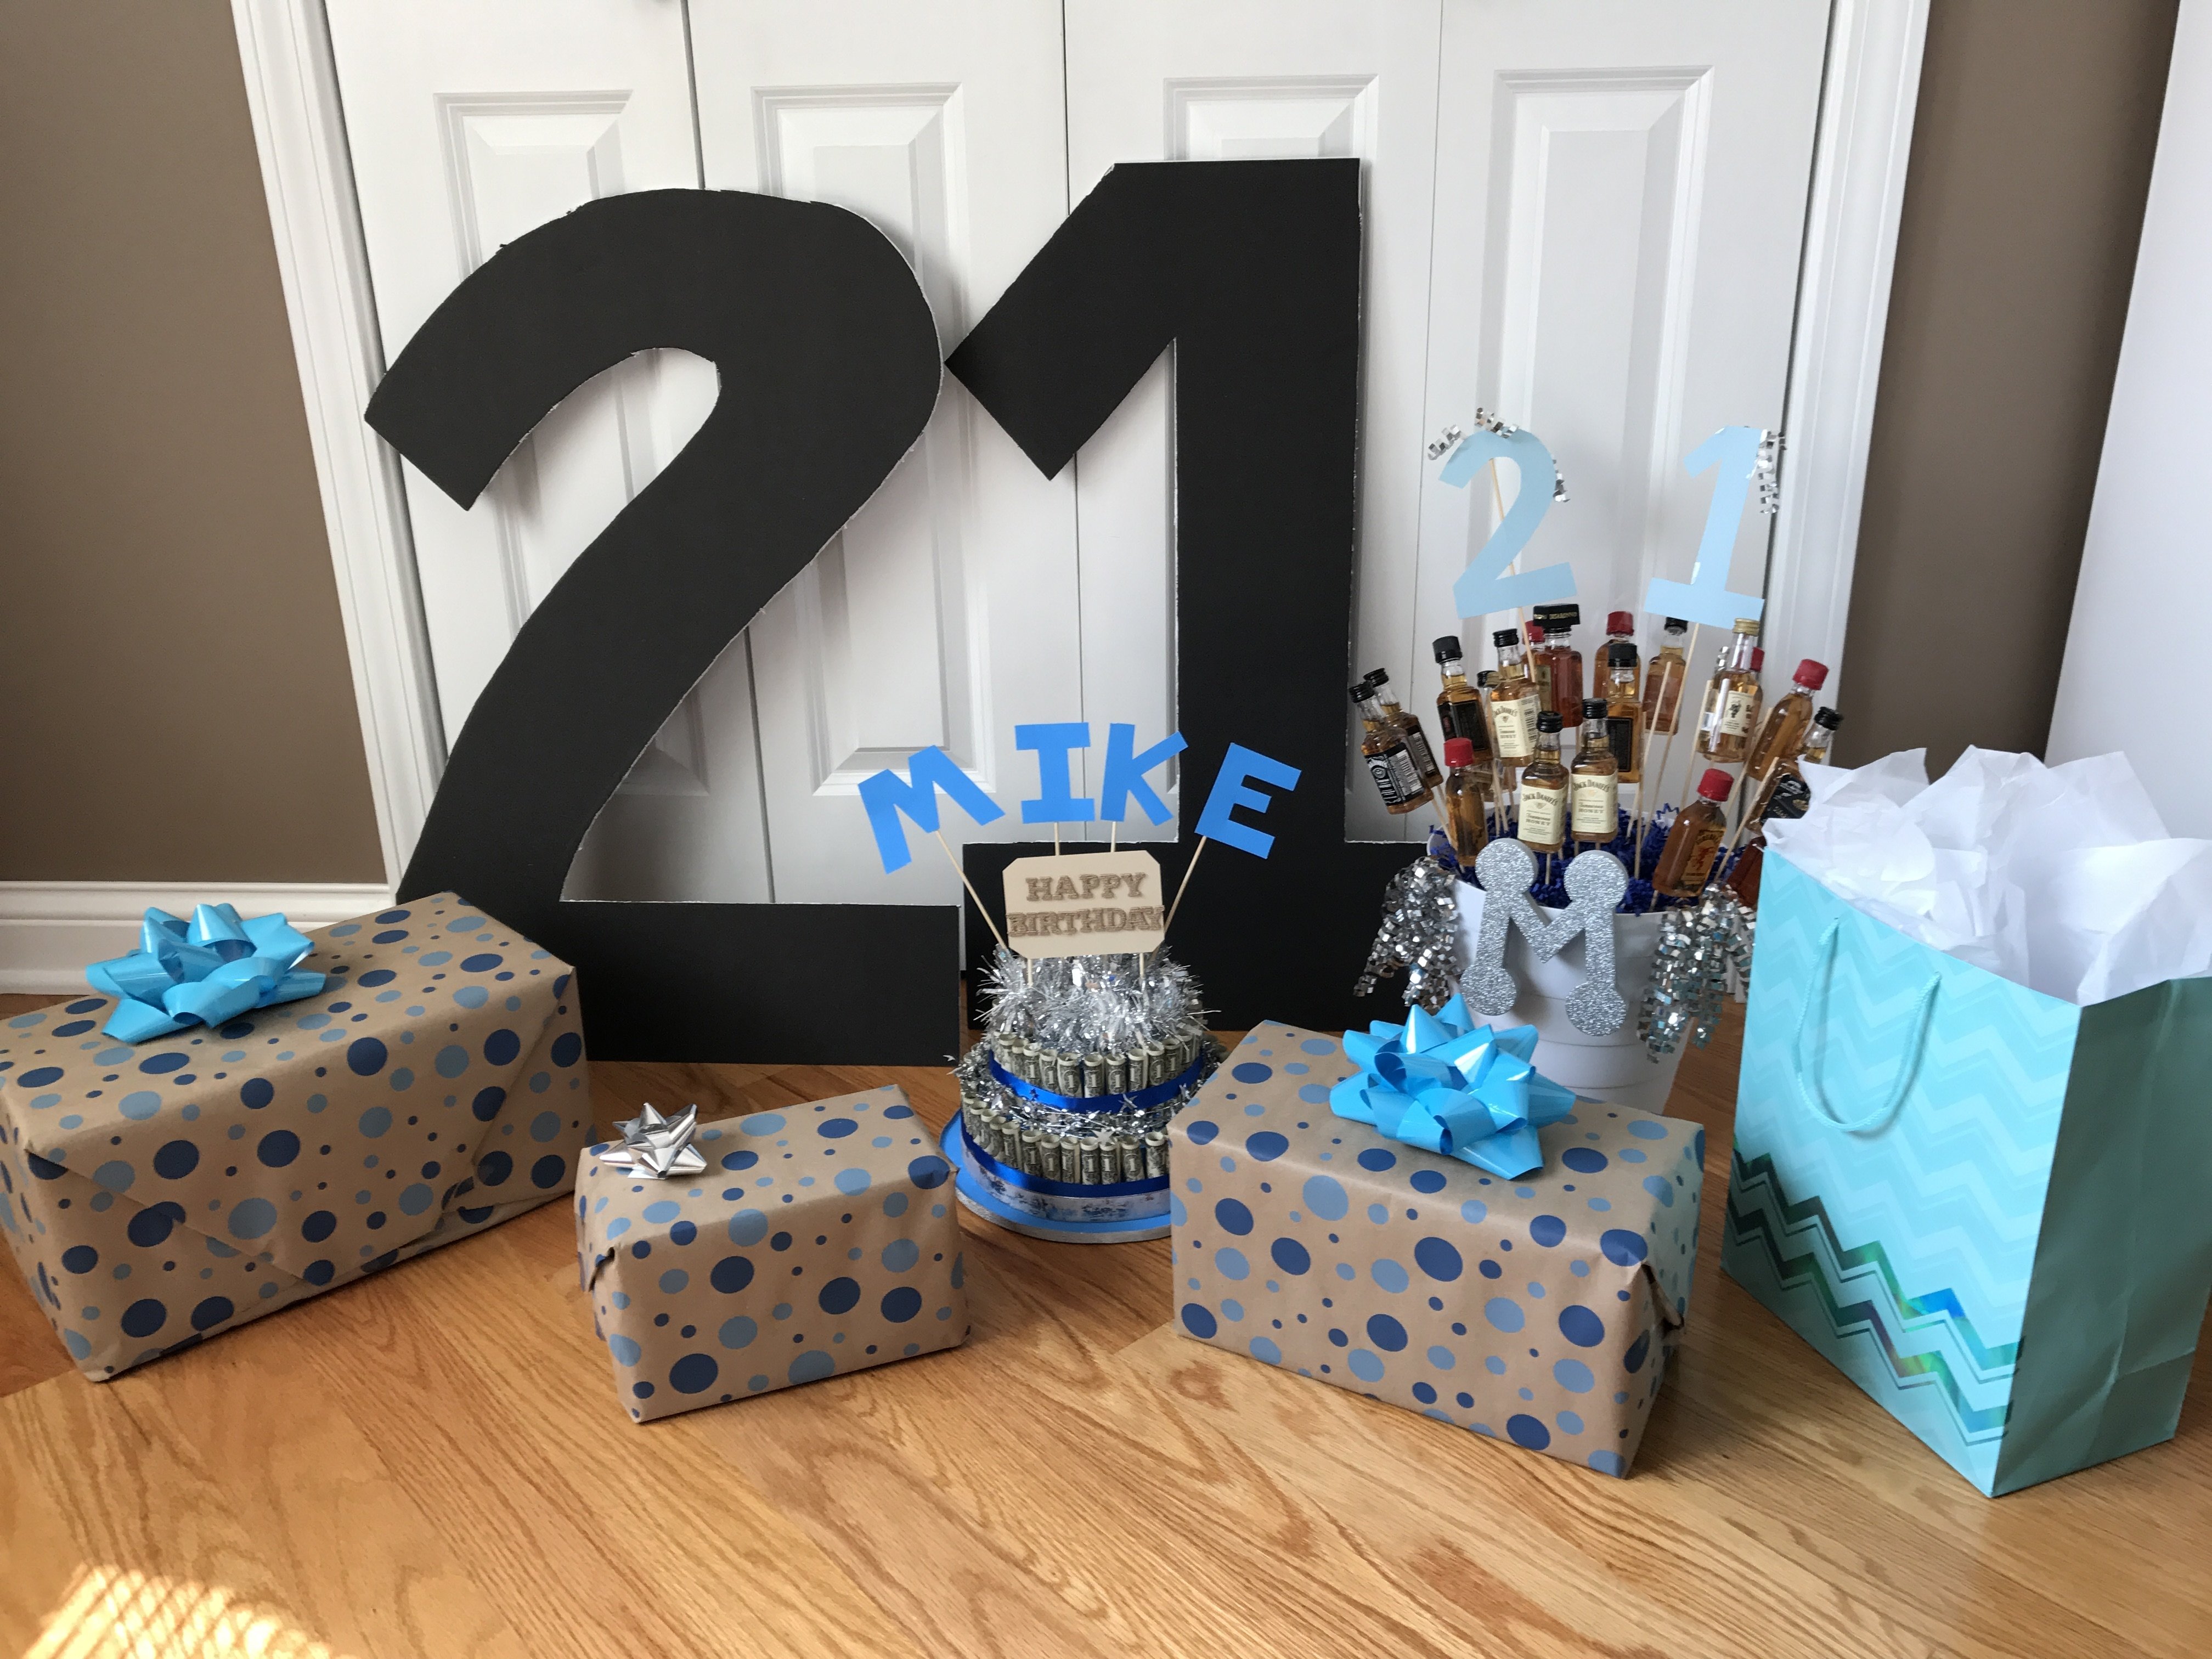 10 Fabulous 21St Birthday Ideas For Boyfriend 21st birthday surprise ideas birthday gifts boyfriend boyfriend 1 2022